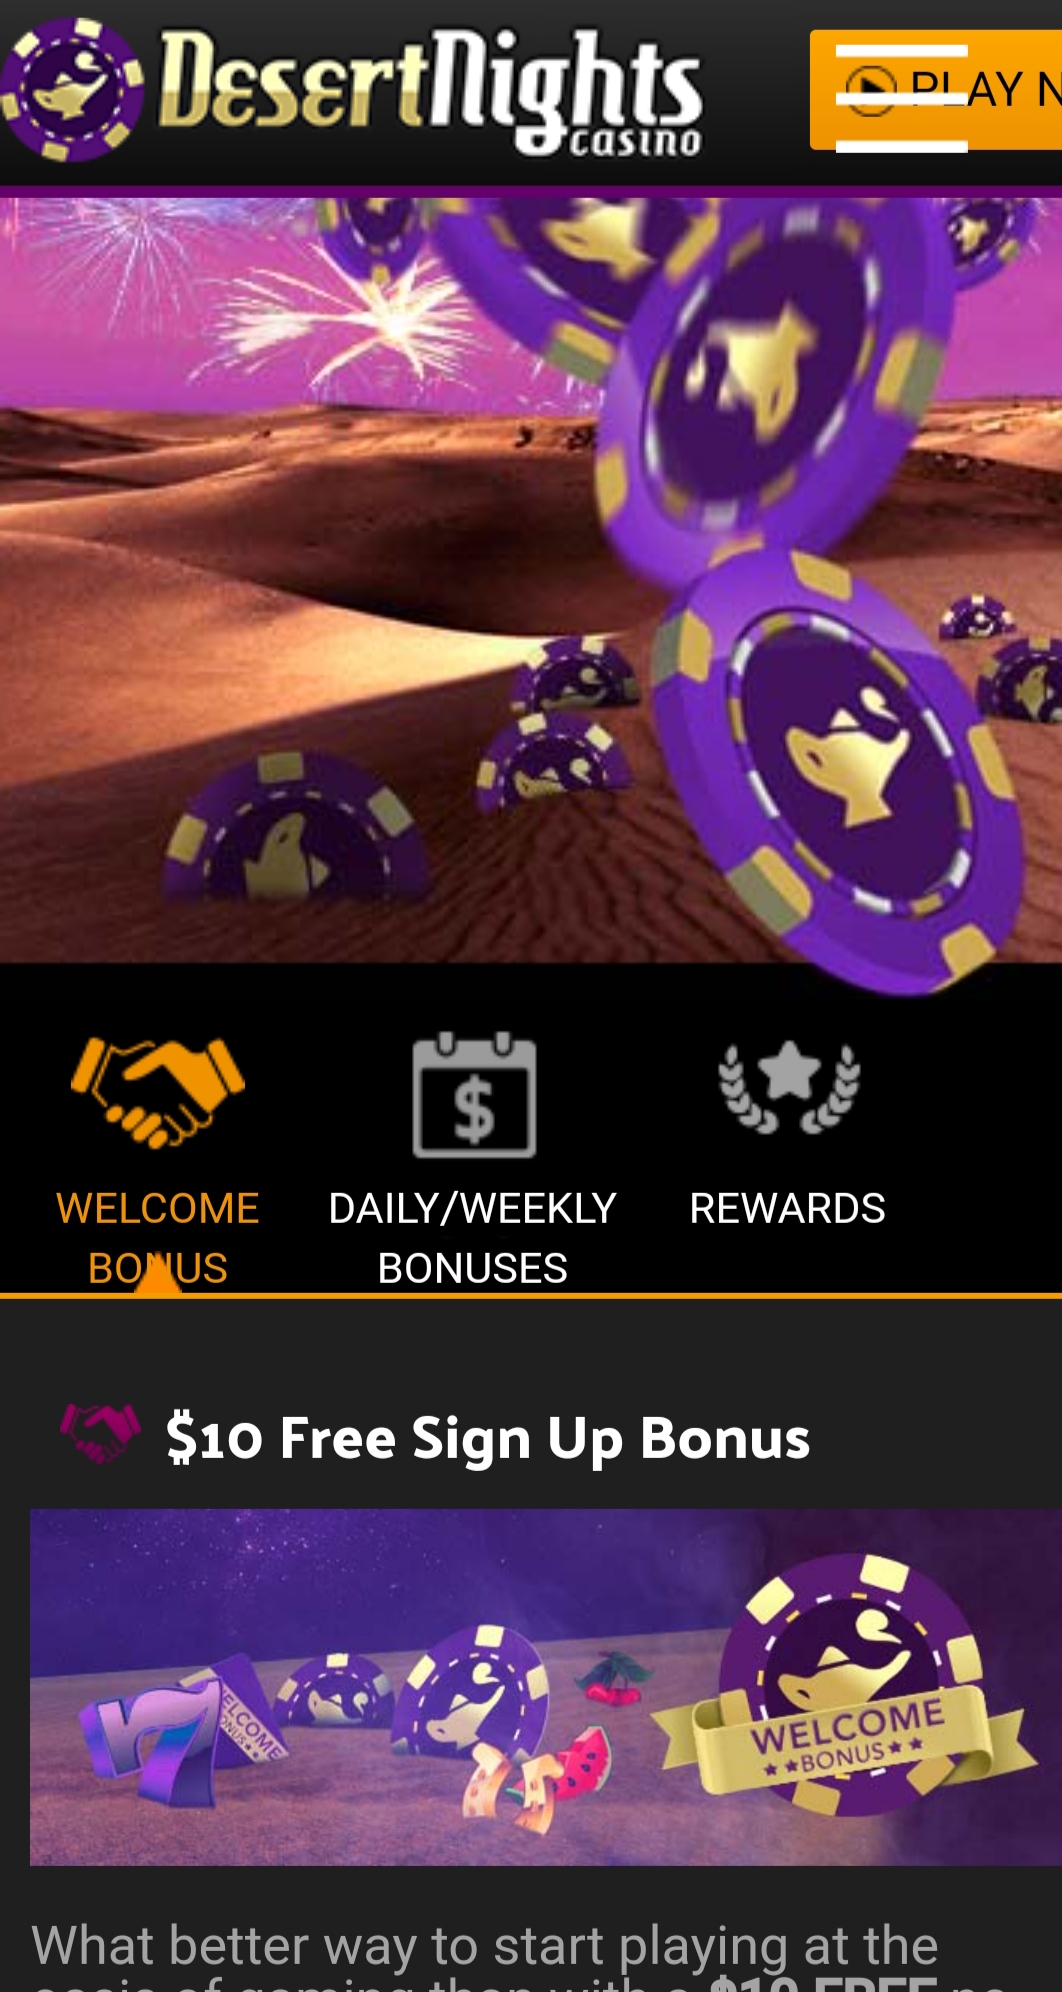 Desert Nights Casino Mobile No Deposit Bonus Review